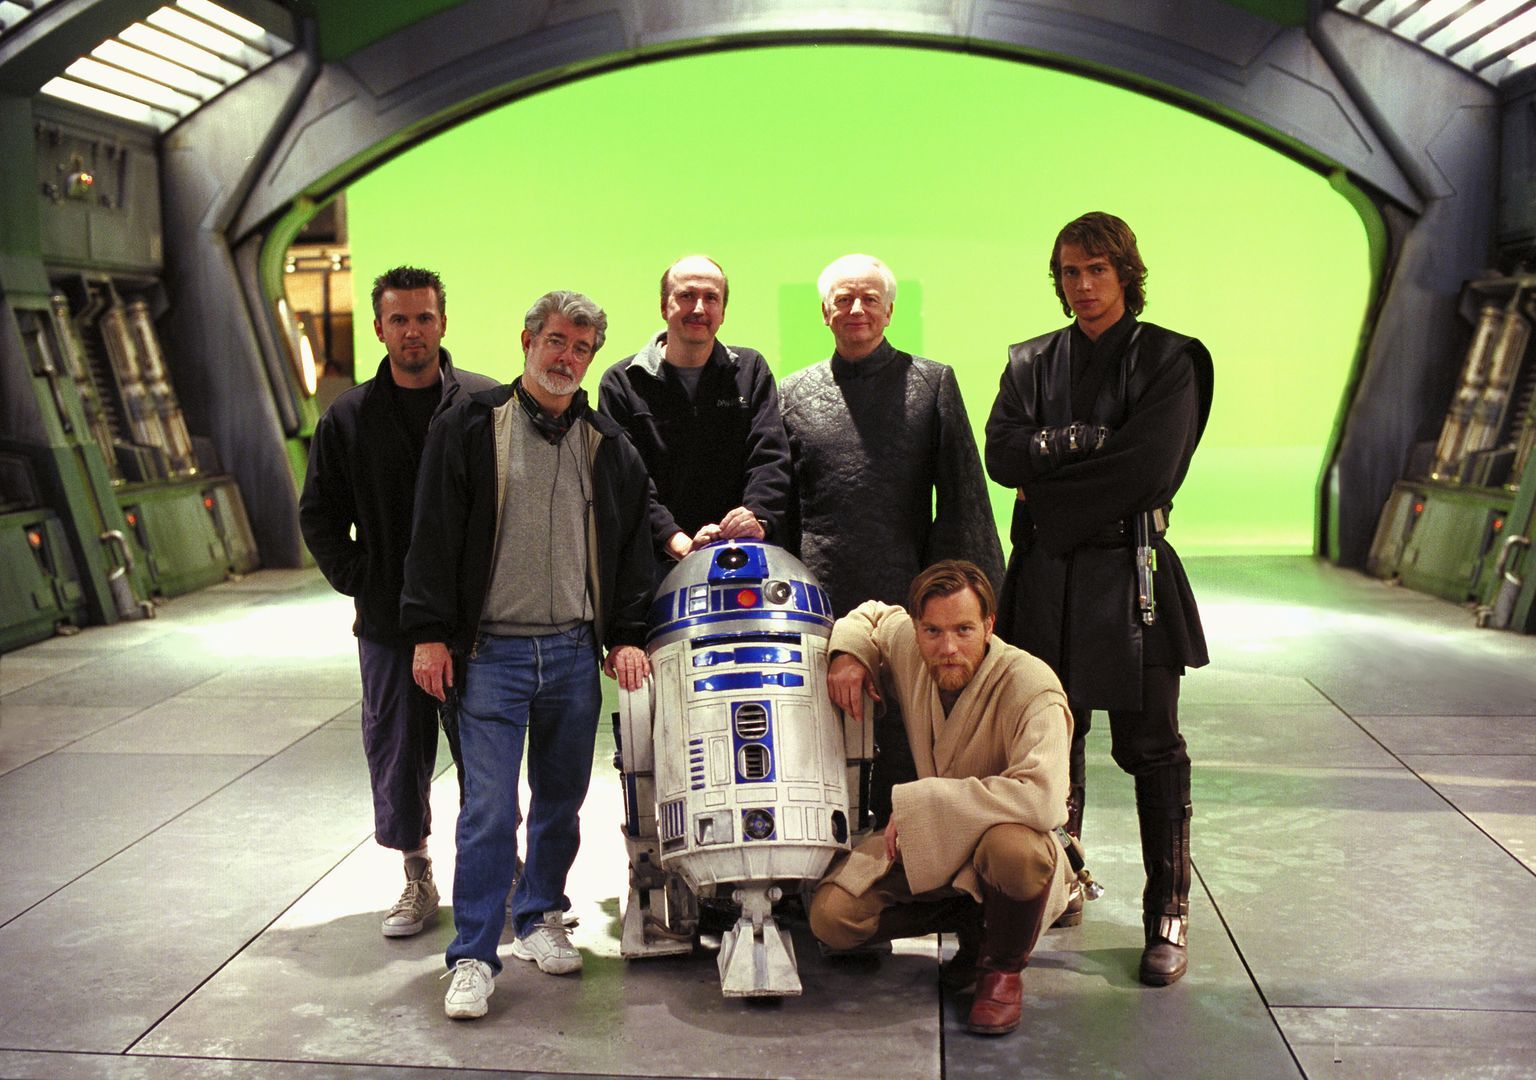 George Lucas, Ewan McGregor, Ian McDiarmid and Hayden Christensen in Zvaigzdziu karai. Situ kerstas (2005)